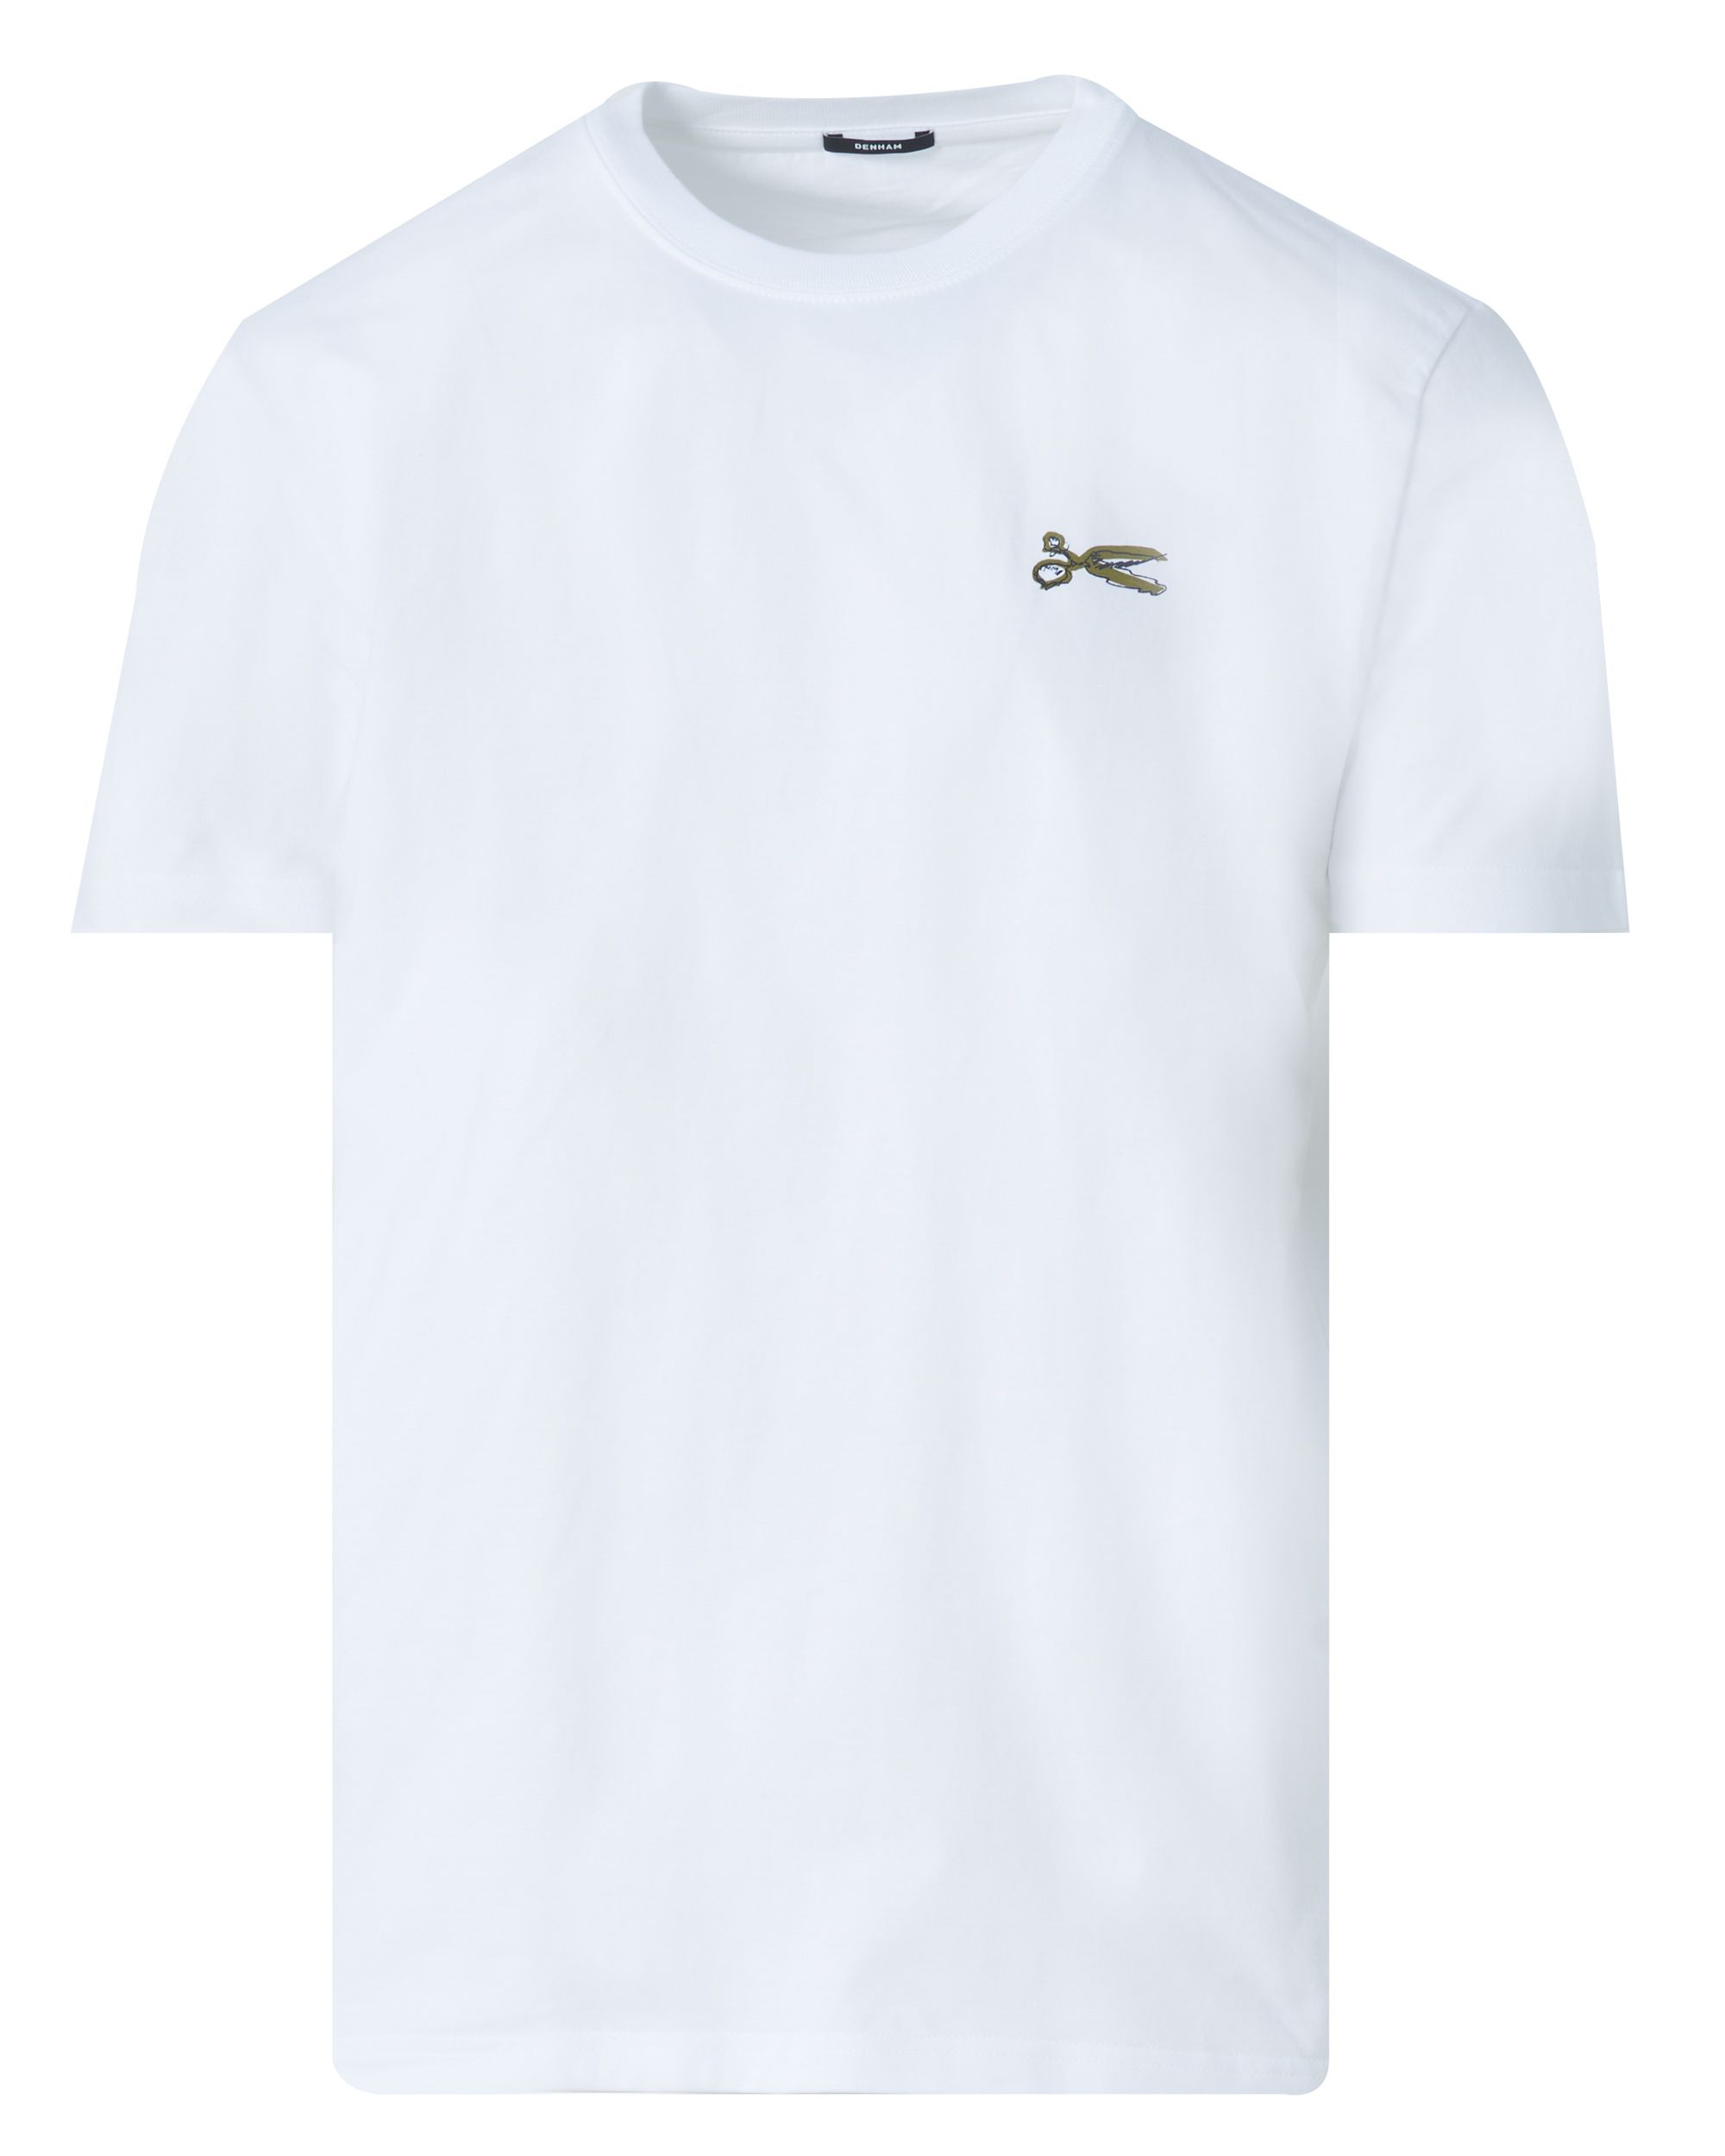 DENHAM Wright T-shirt KM Wit 085163-001-L